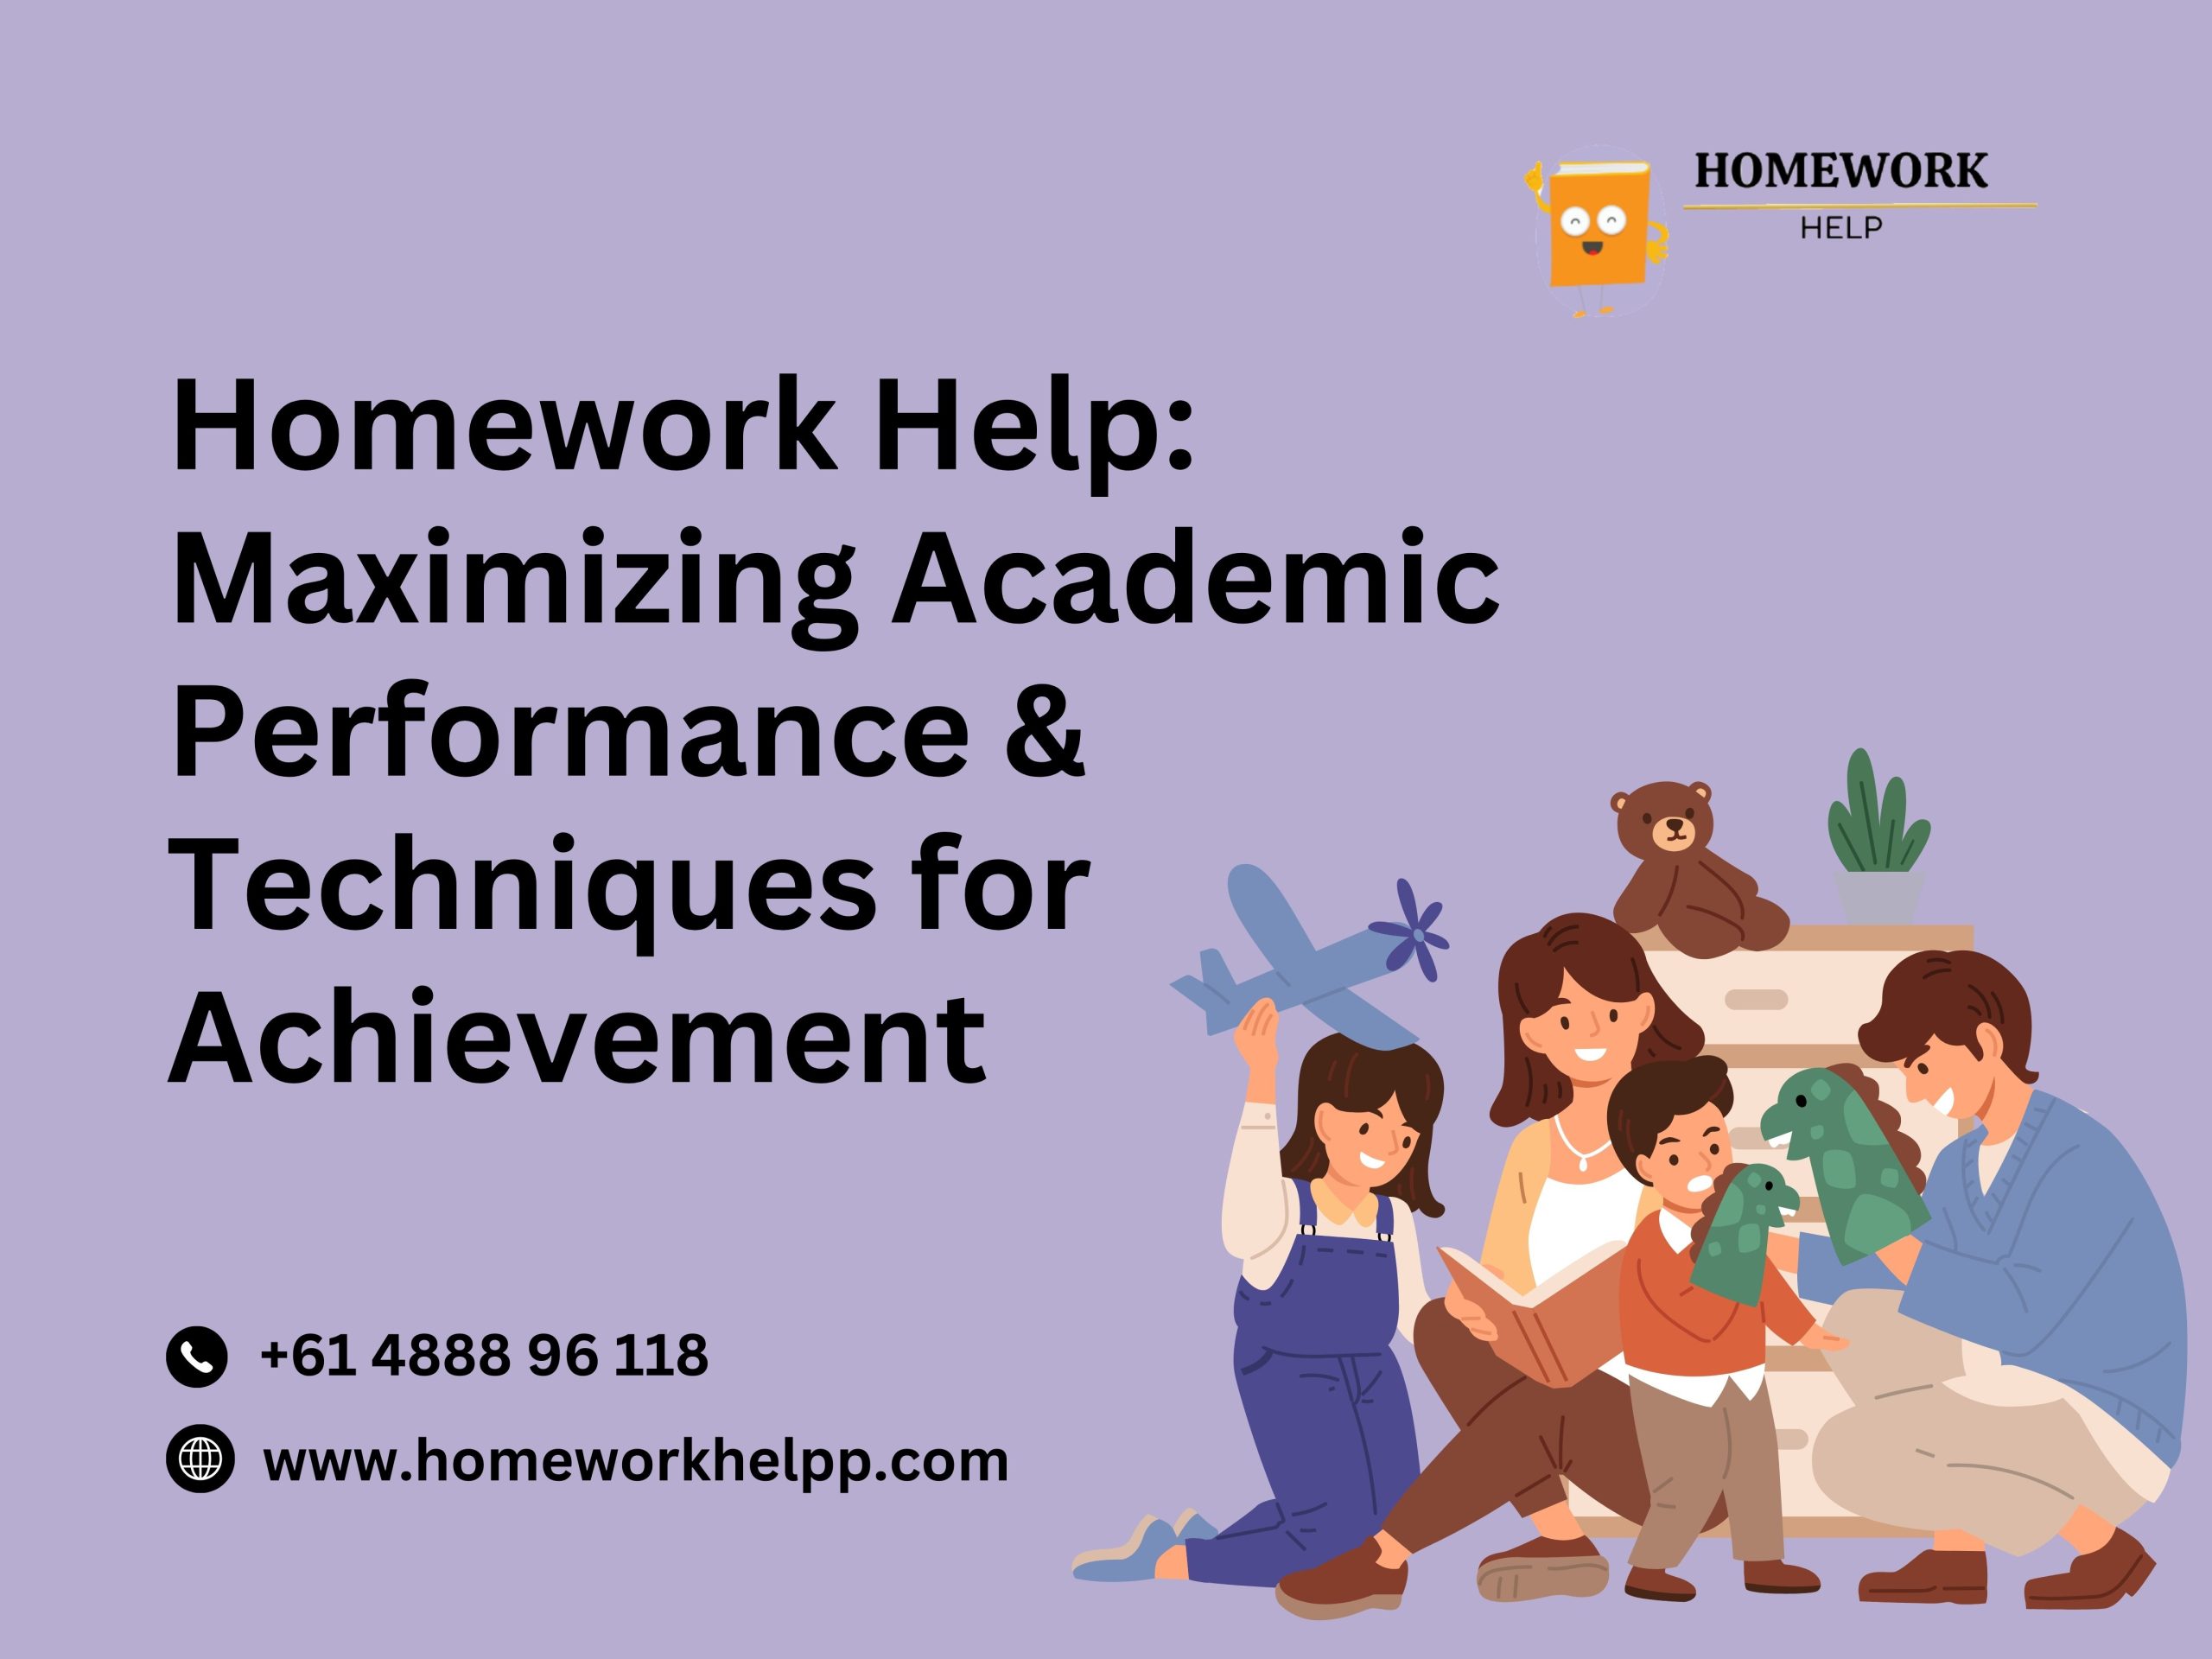 Homework Help: Maximizing Academic Performance & Techniques for Achievement